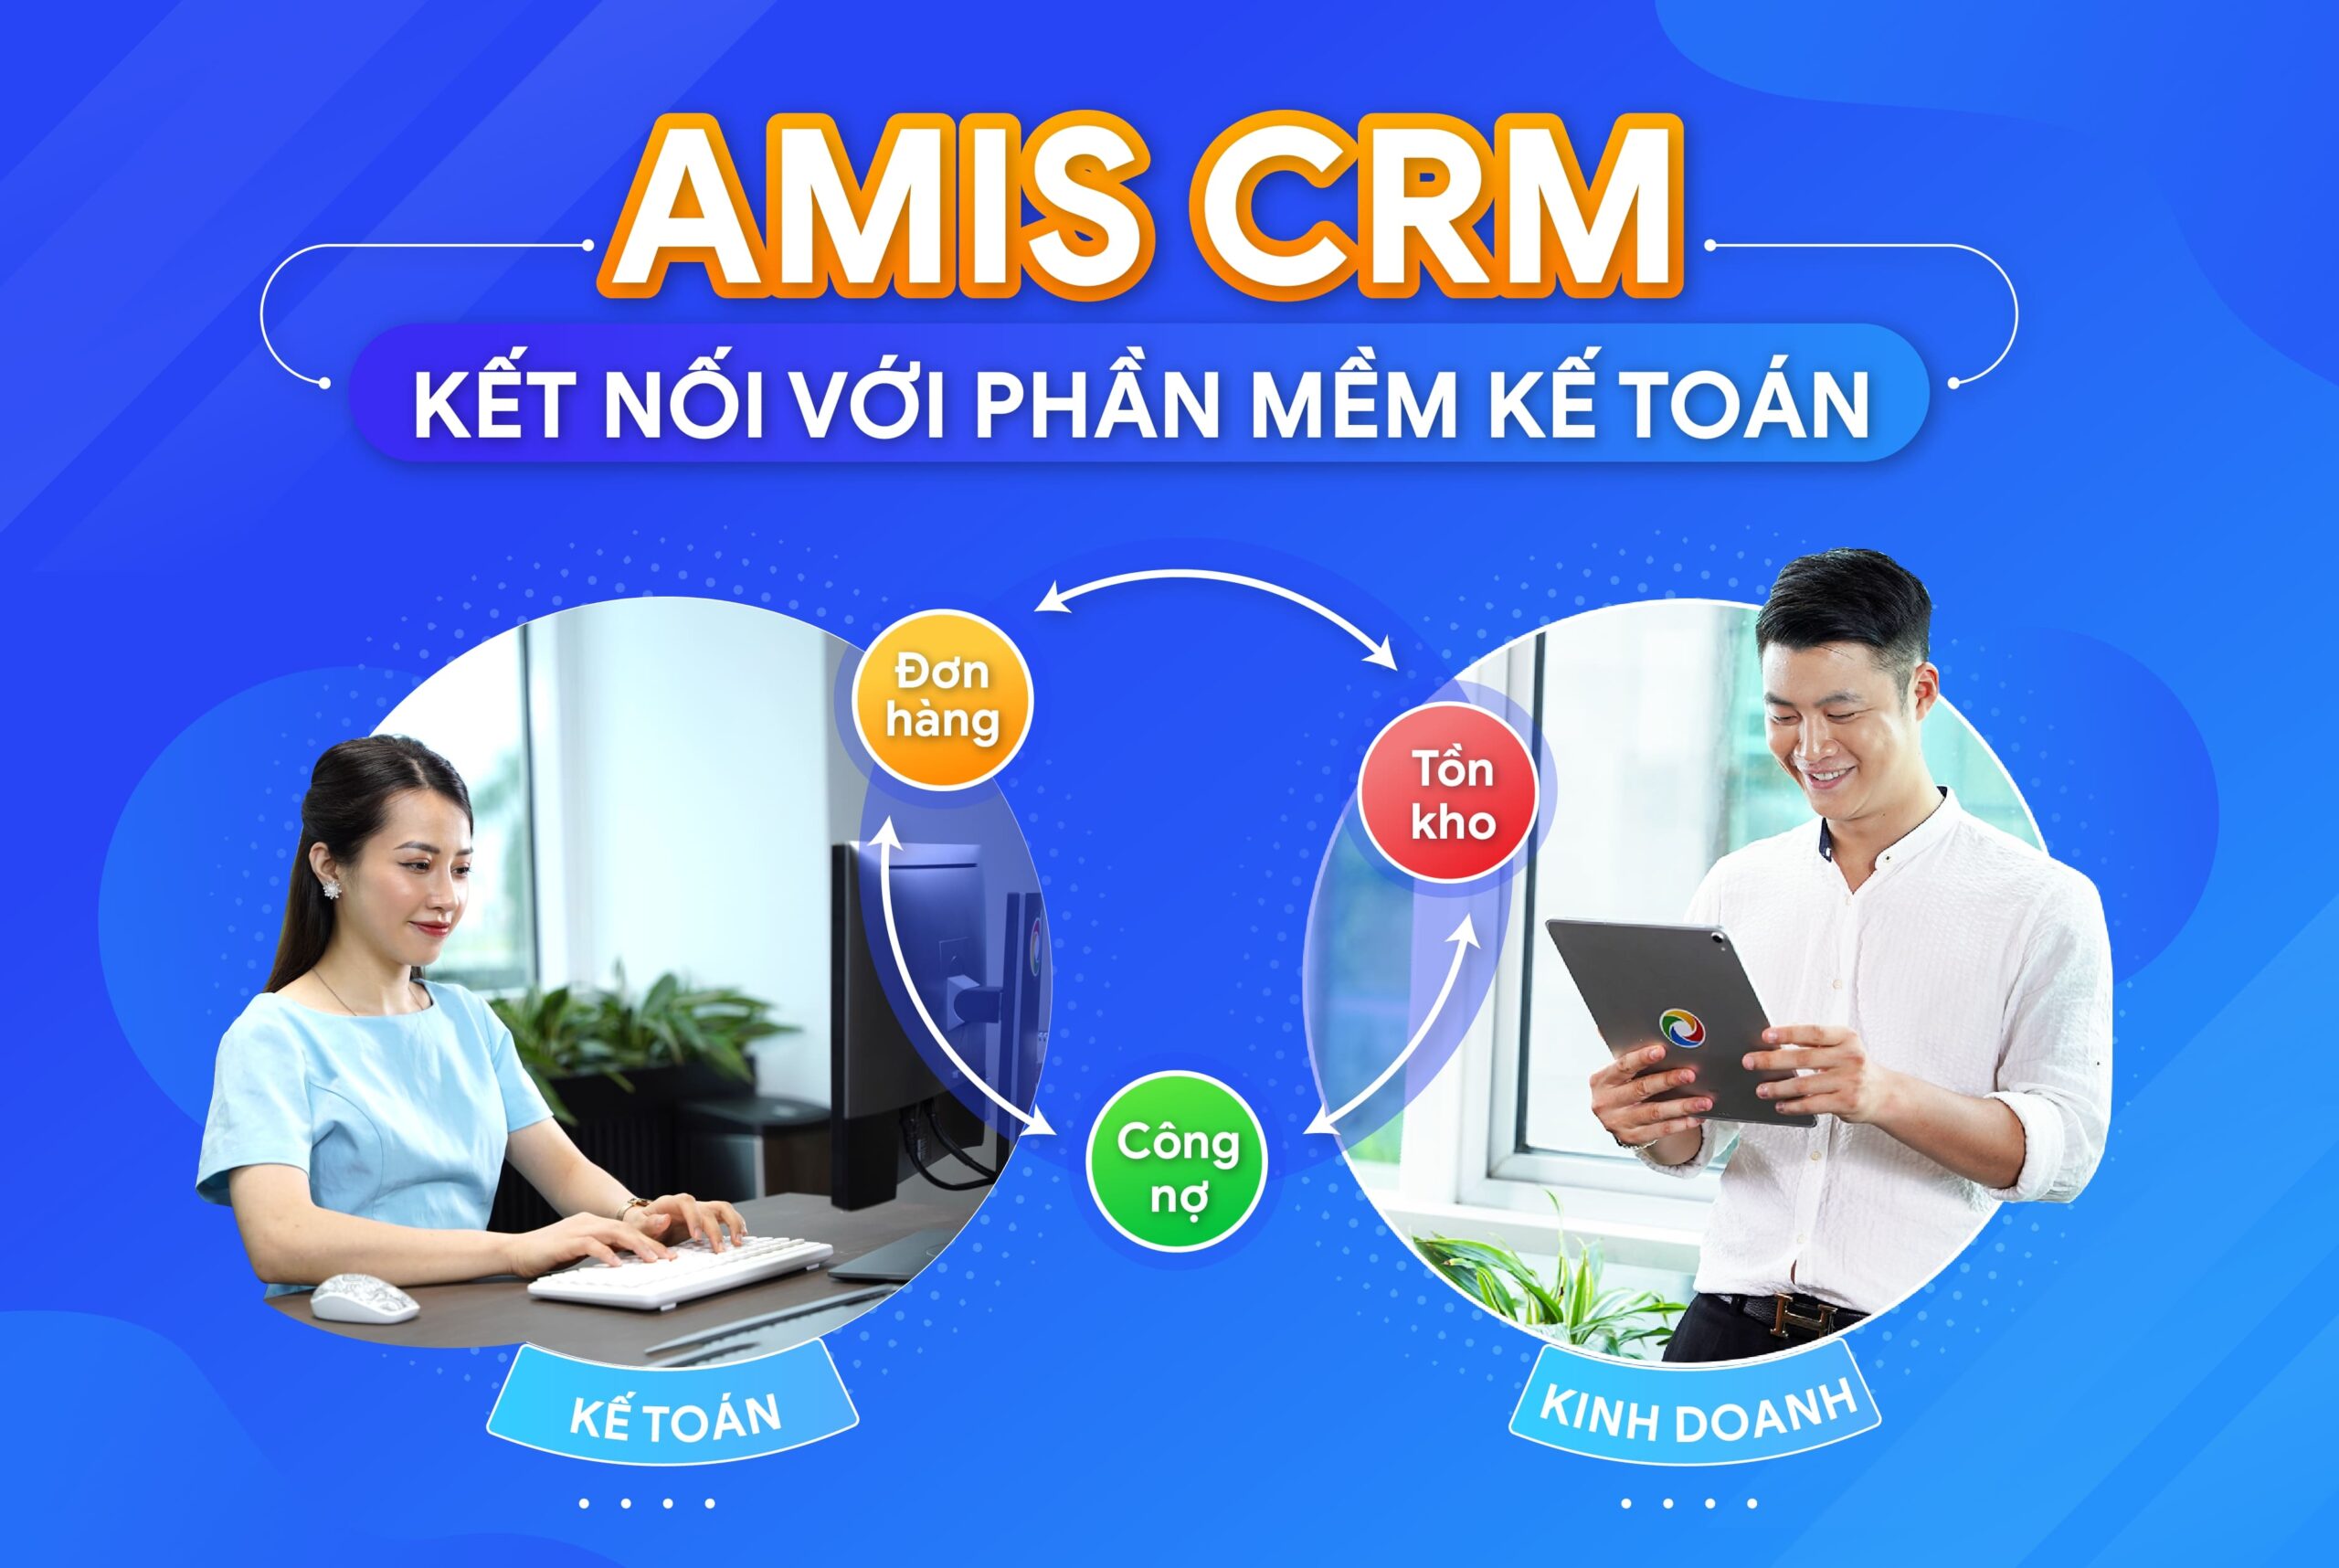 AMIS CRM